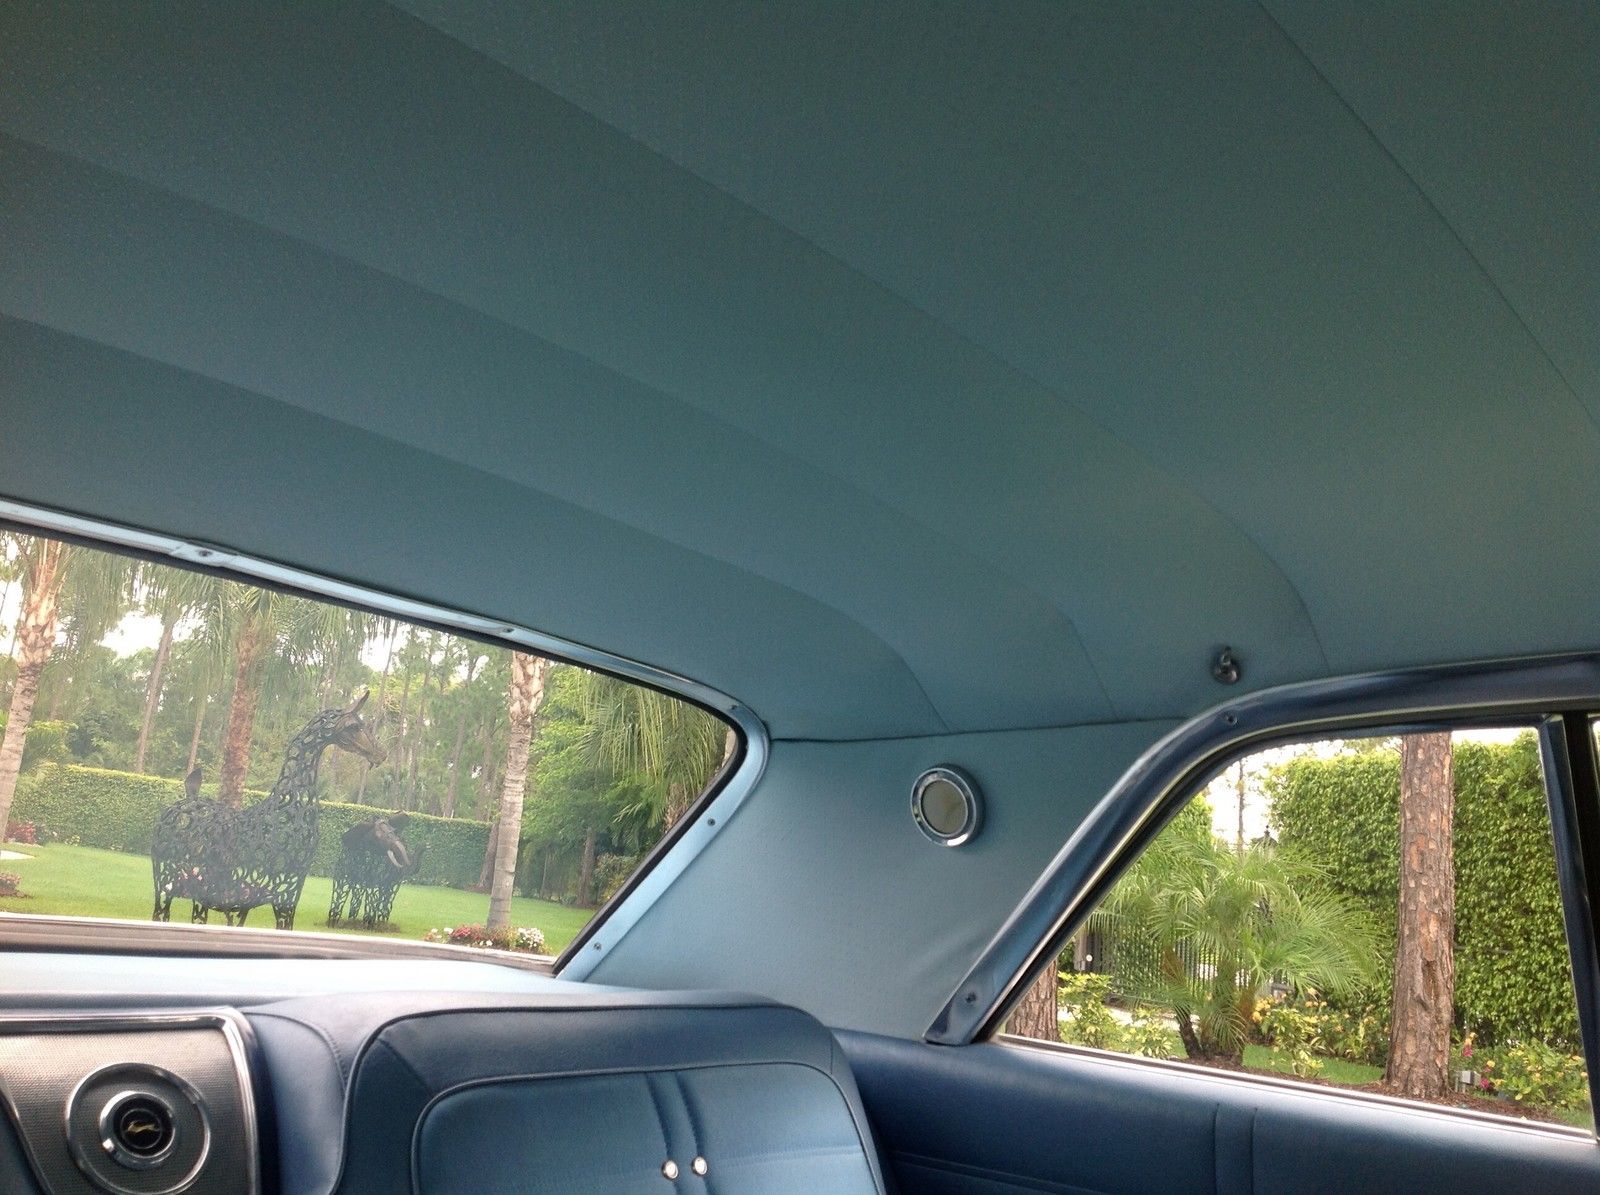 1963 Impala Sport Coupe - 409 blue 12